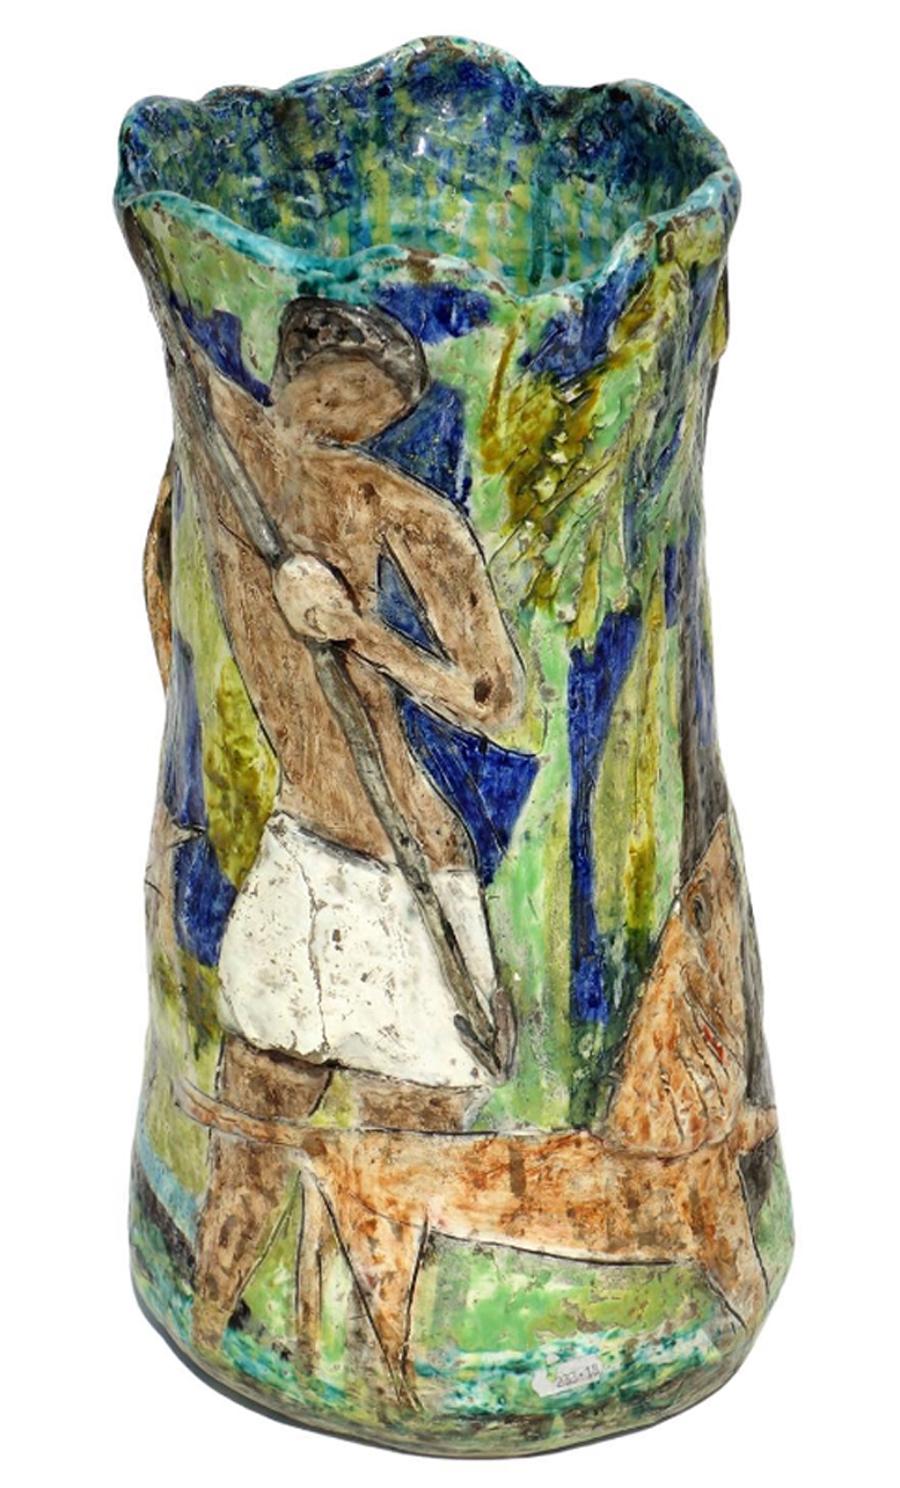  Colored Enamel Ceramic Vase
Primitive Scene in relief
Italy, 1950s

Artist sinedrio on the base.
Original 1950s
Excellent condiction, no resturation.
